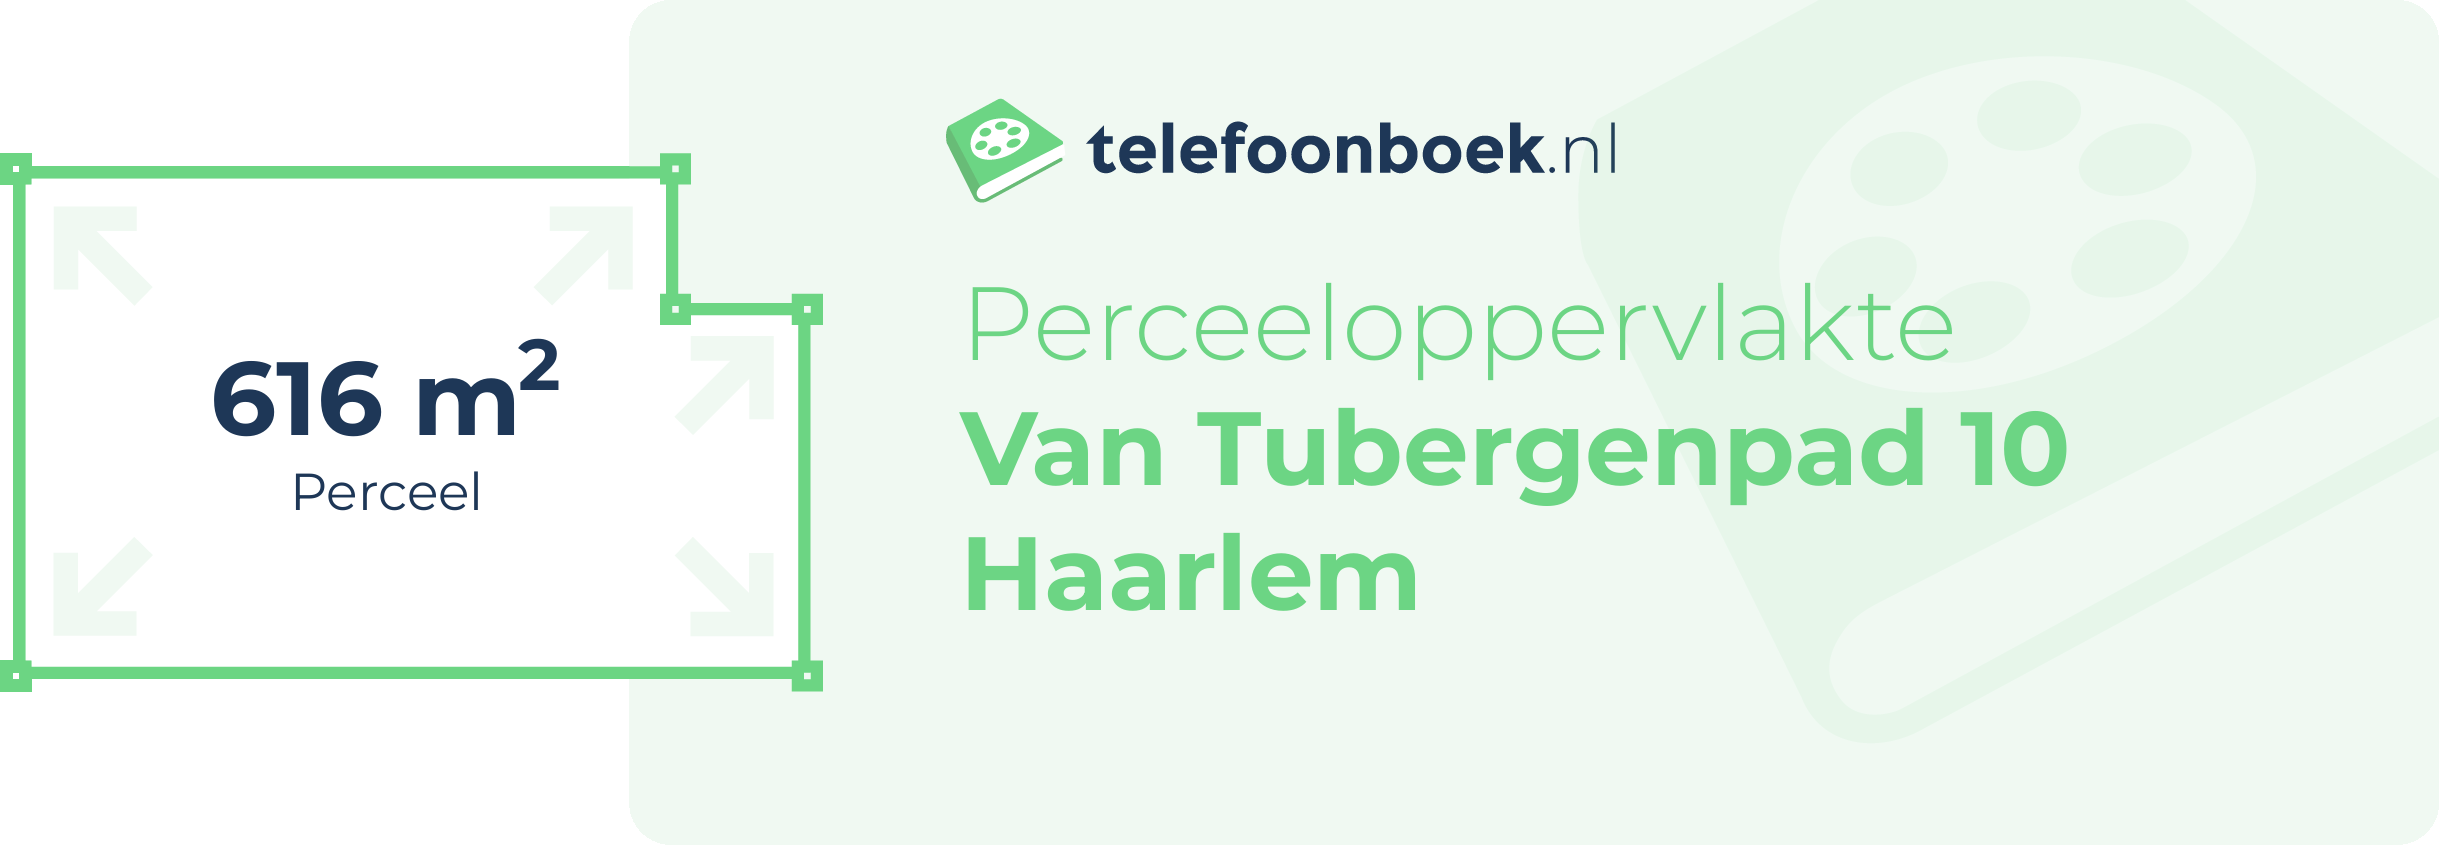 Perceeloppervlakte Van Tubergenpad 10 Haarlem